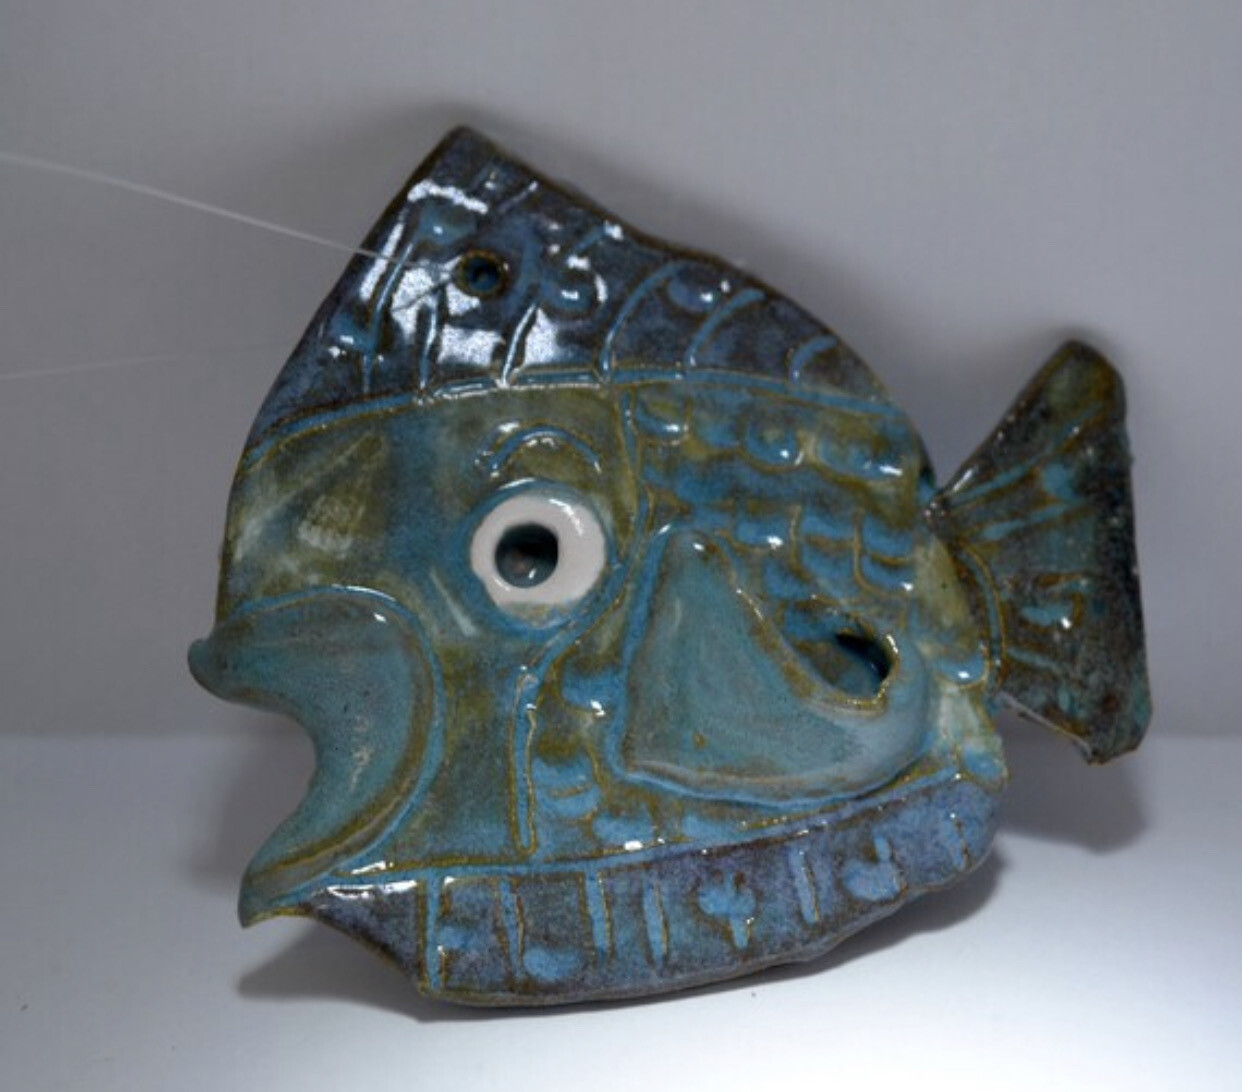 Handmade Pottery - Colorful Blue Clay Fish Plaque Wall Art - Handmade Ceramic Sculpture - Ocean Nautical Beach Coastal Decor, Handpainted